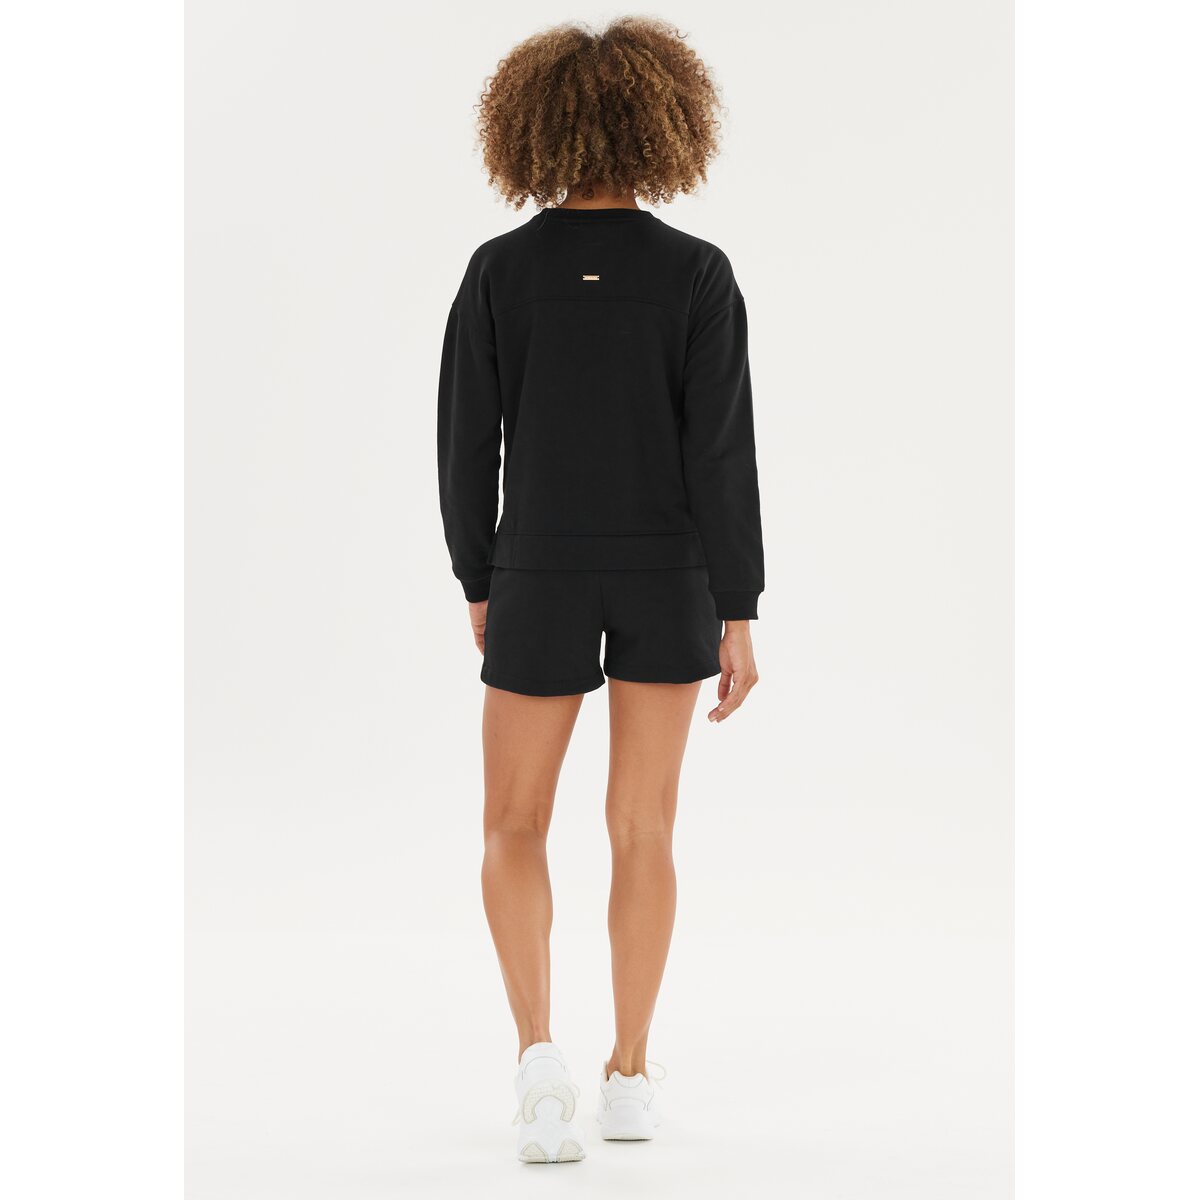 Athlecia Ruthie Womenswear Shorts - Black 2 Shaws Department Stores